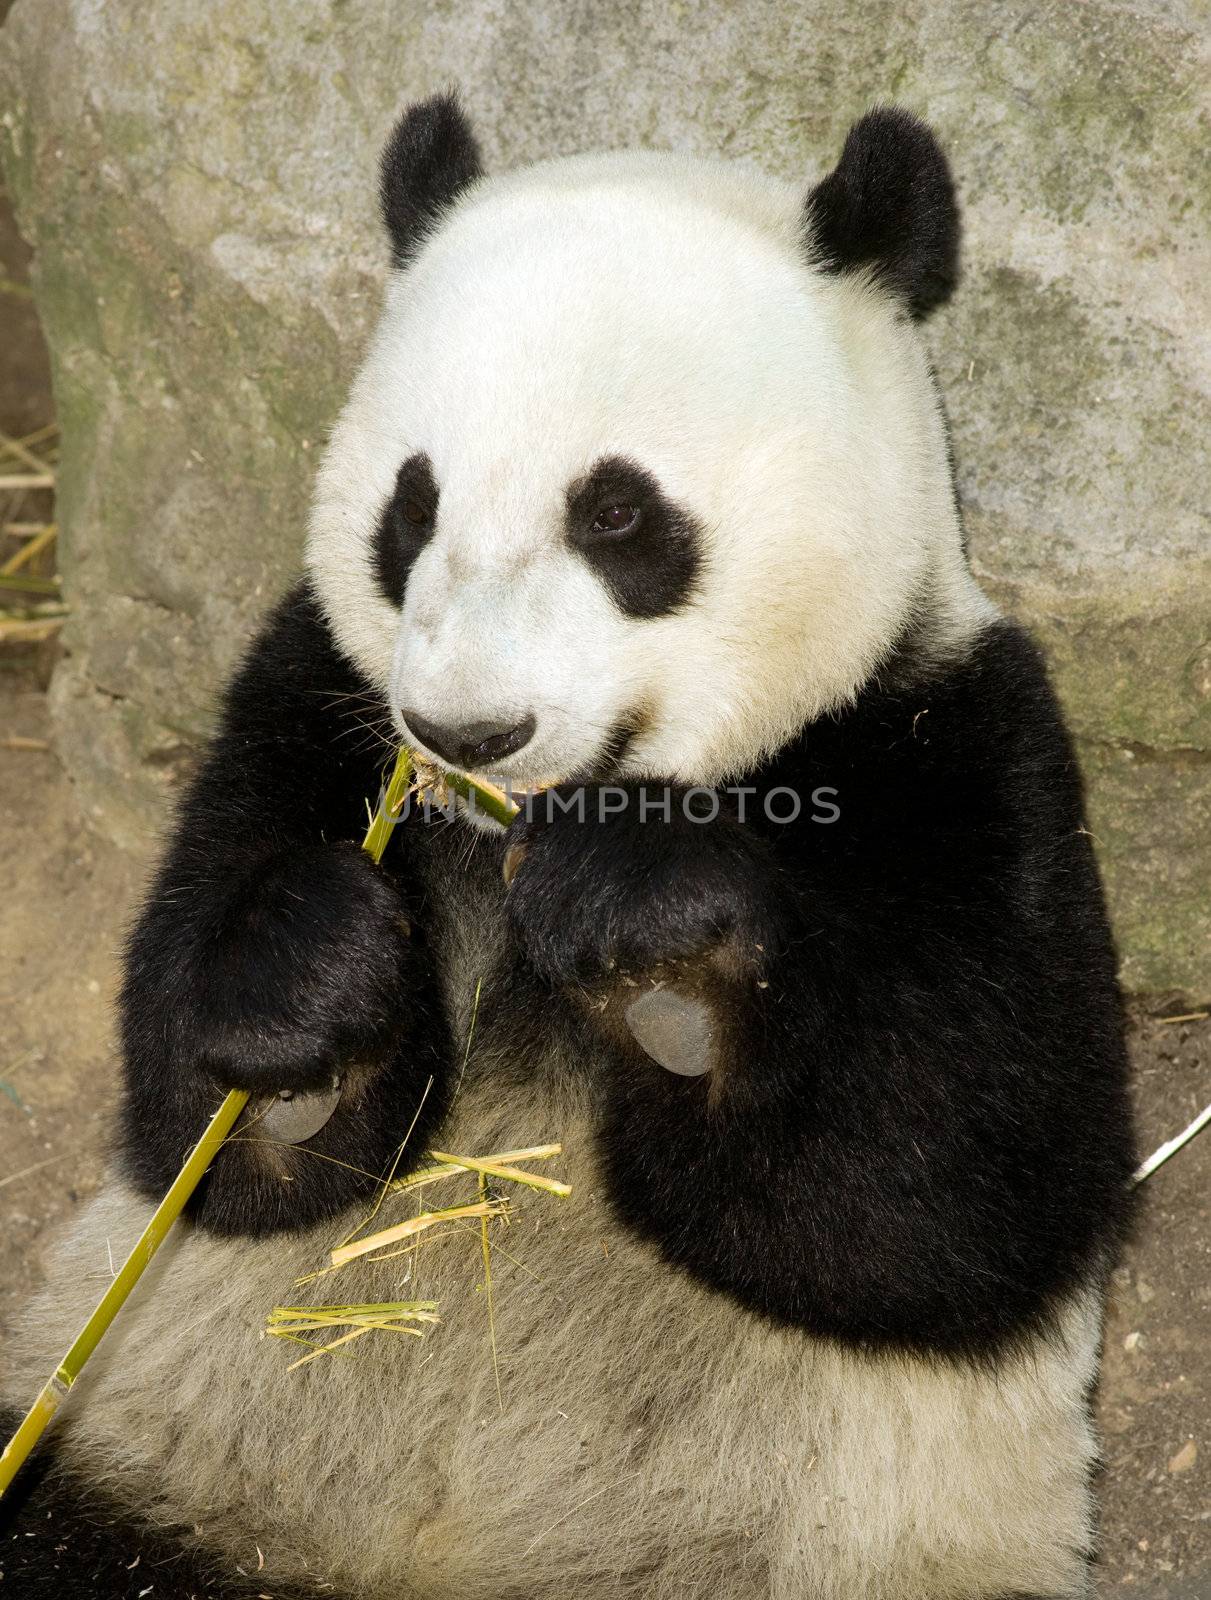 A Panda sits while eating a bamboo stalk